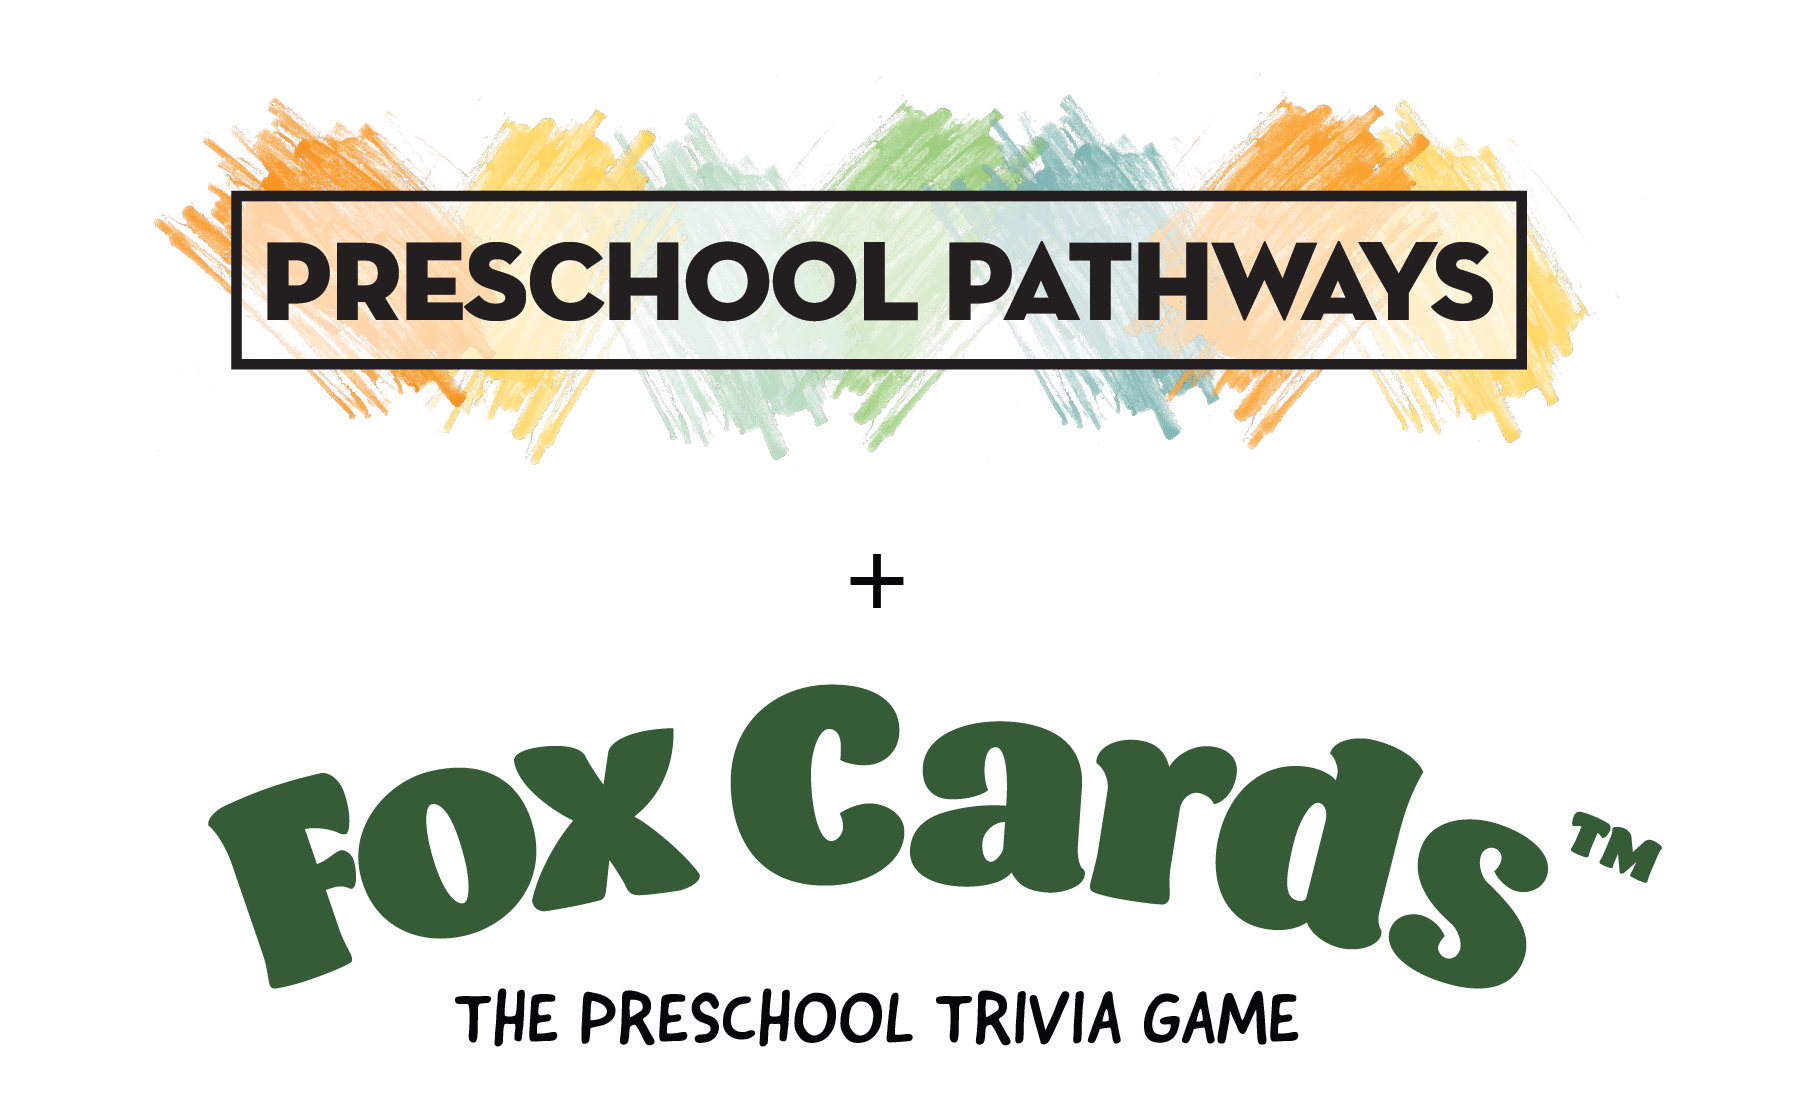 Preschool Pathways + Fox Cards